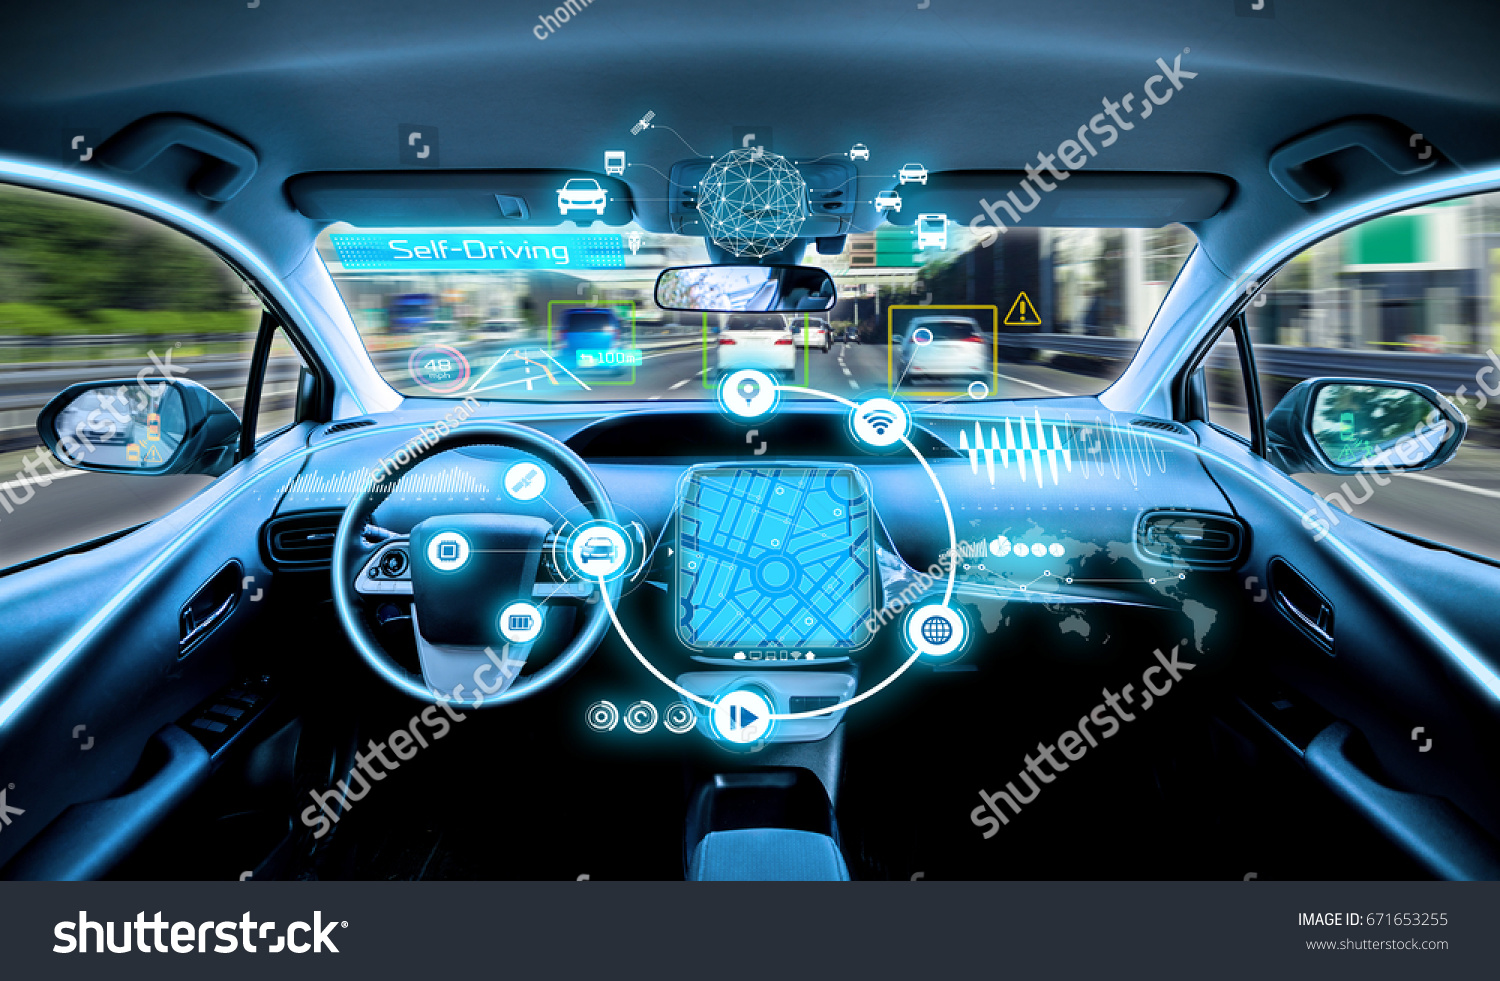 empty cockpit of vehicle. HUD(Head Up Display) and digital instruments panel, autonomous car #671653255